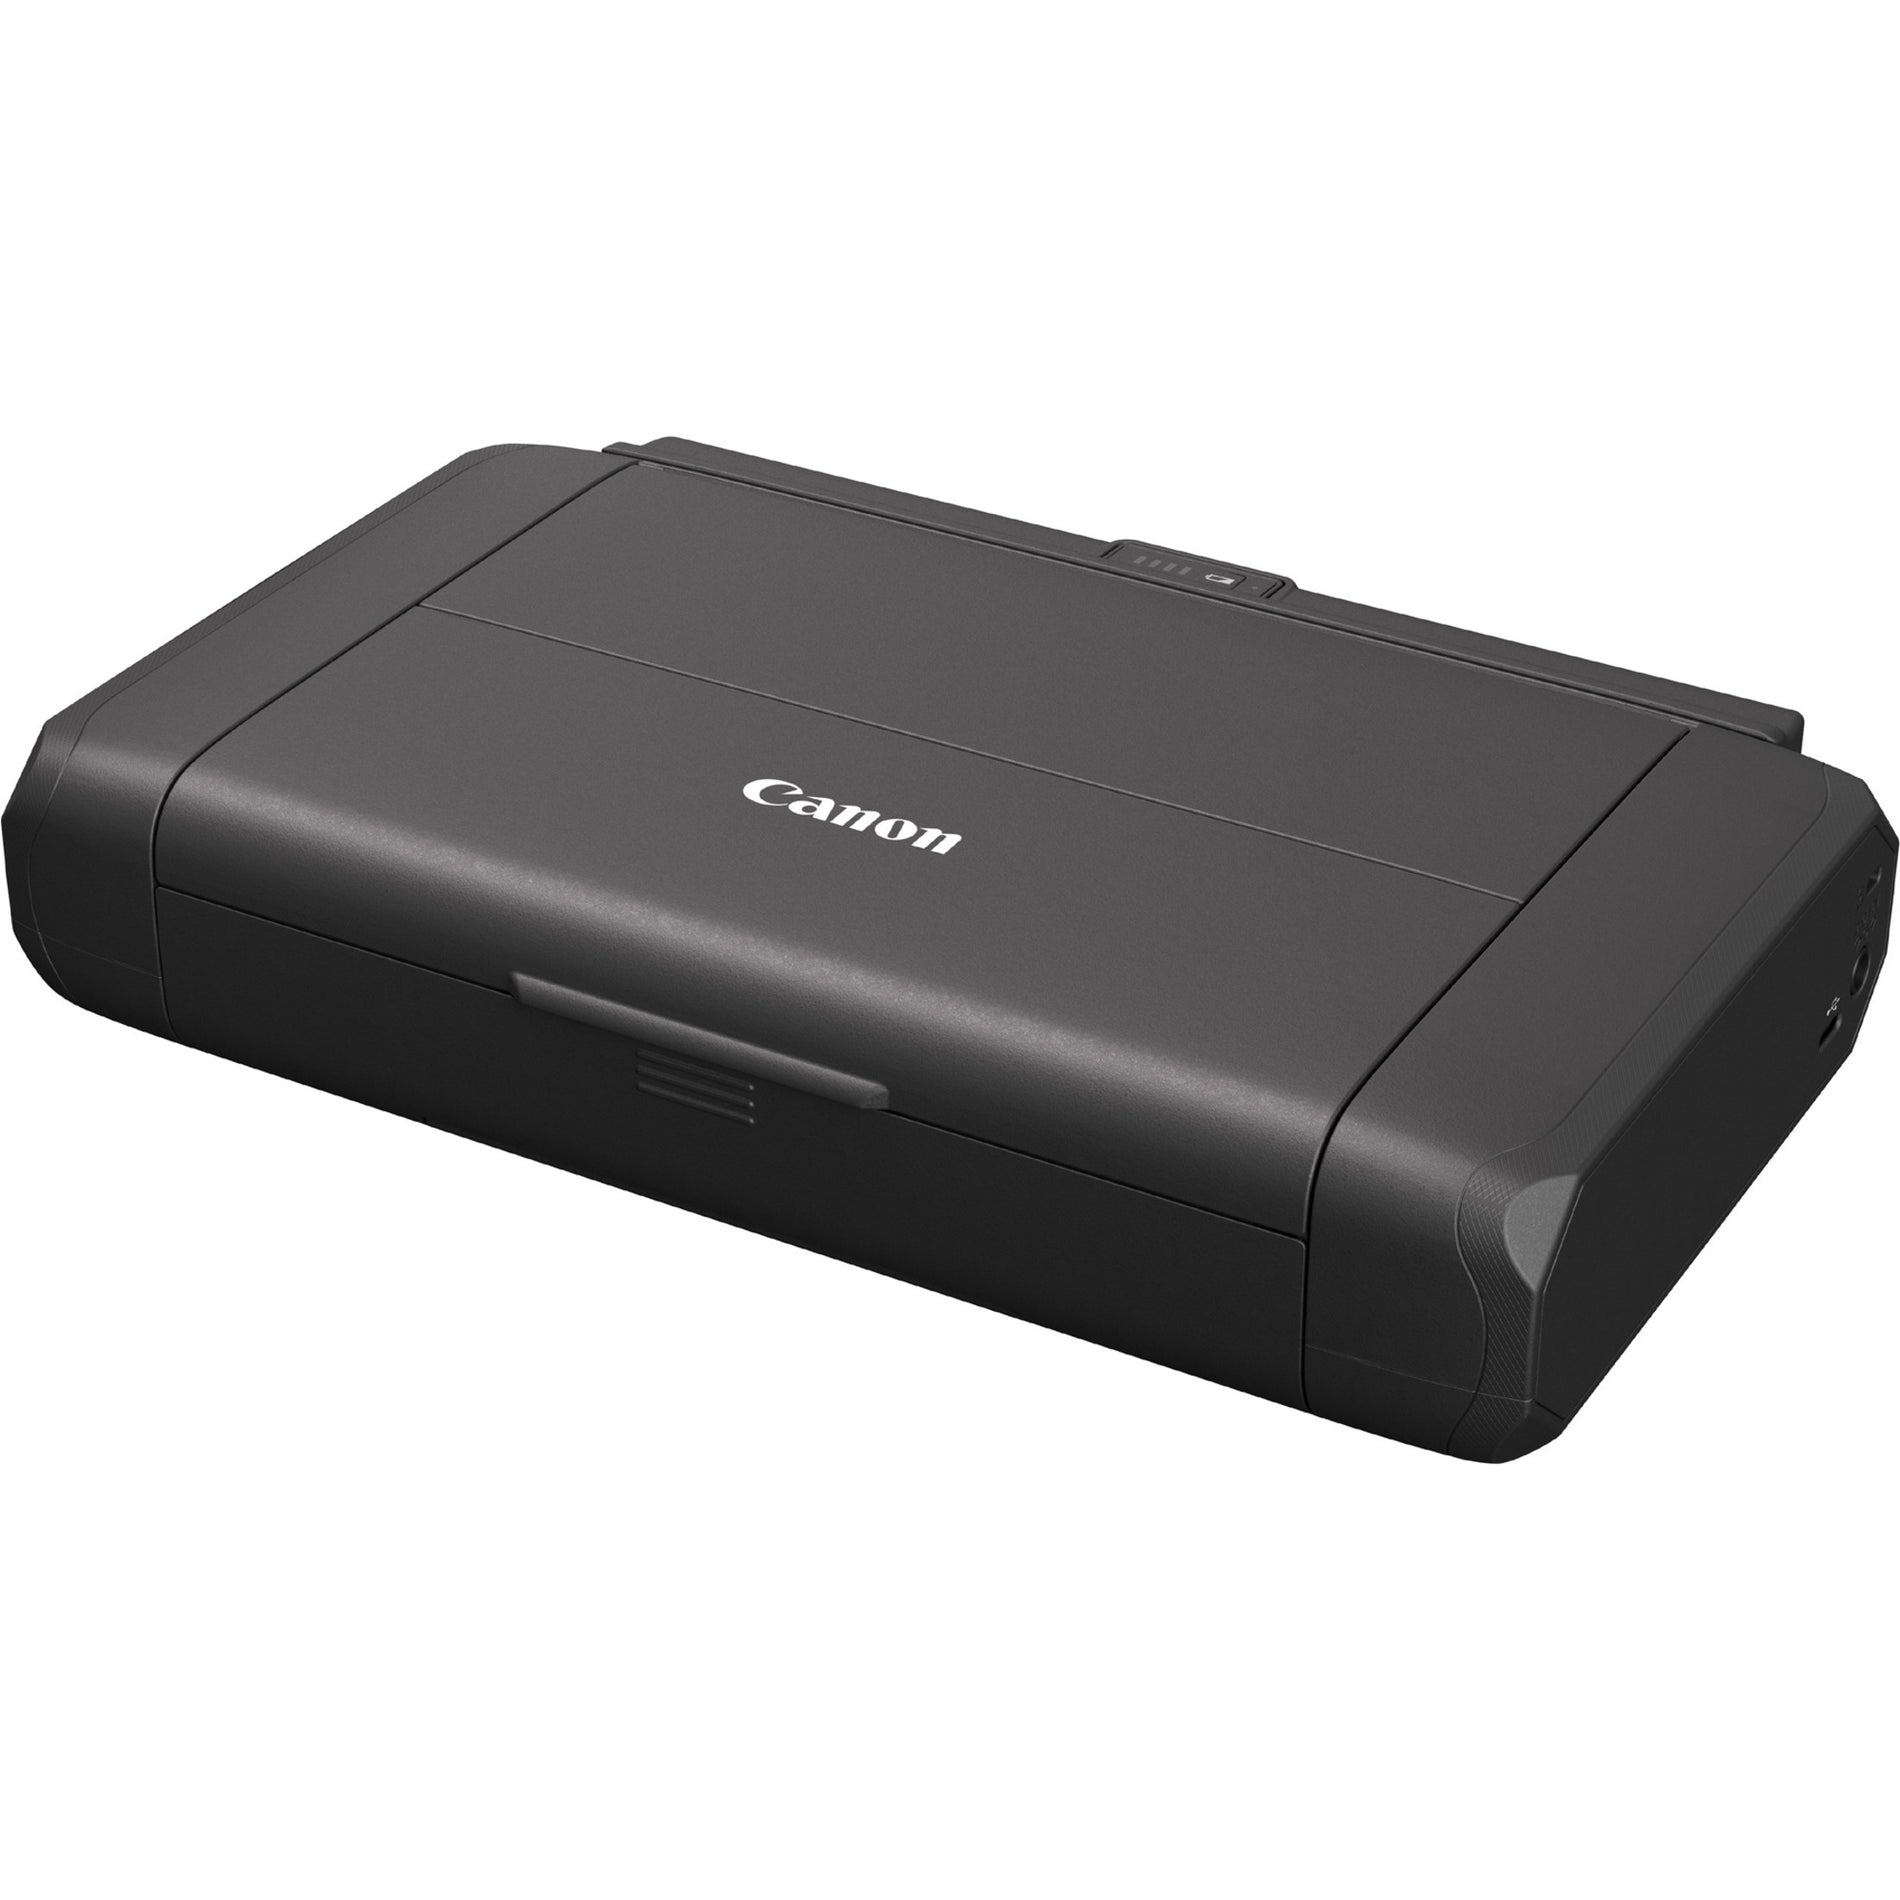 Canon 4167C002 PIXMA TR150 Portable Inkjet Printer, Wireless Color Photo Print, 4800 x 1200 dpi